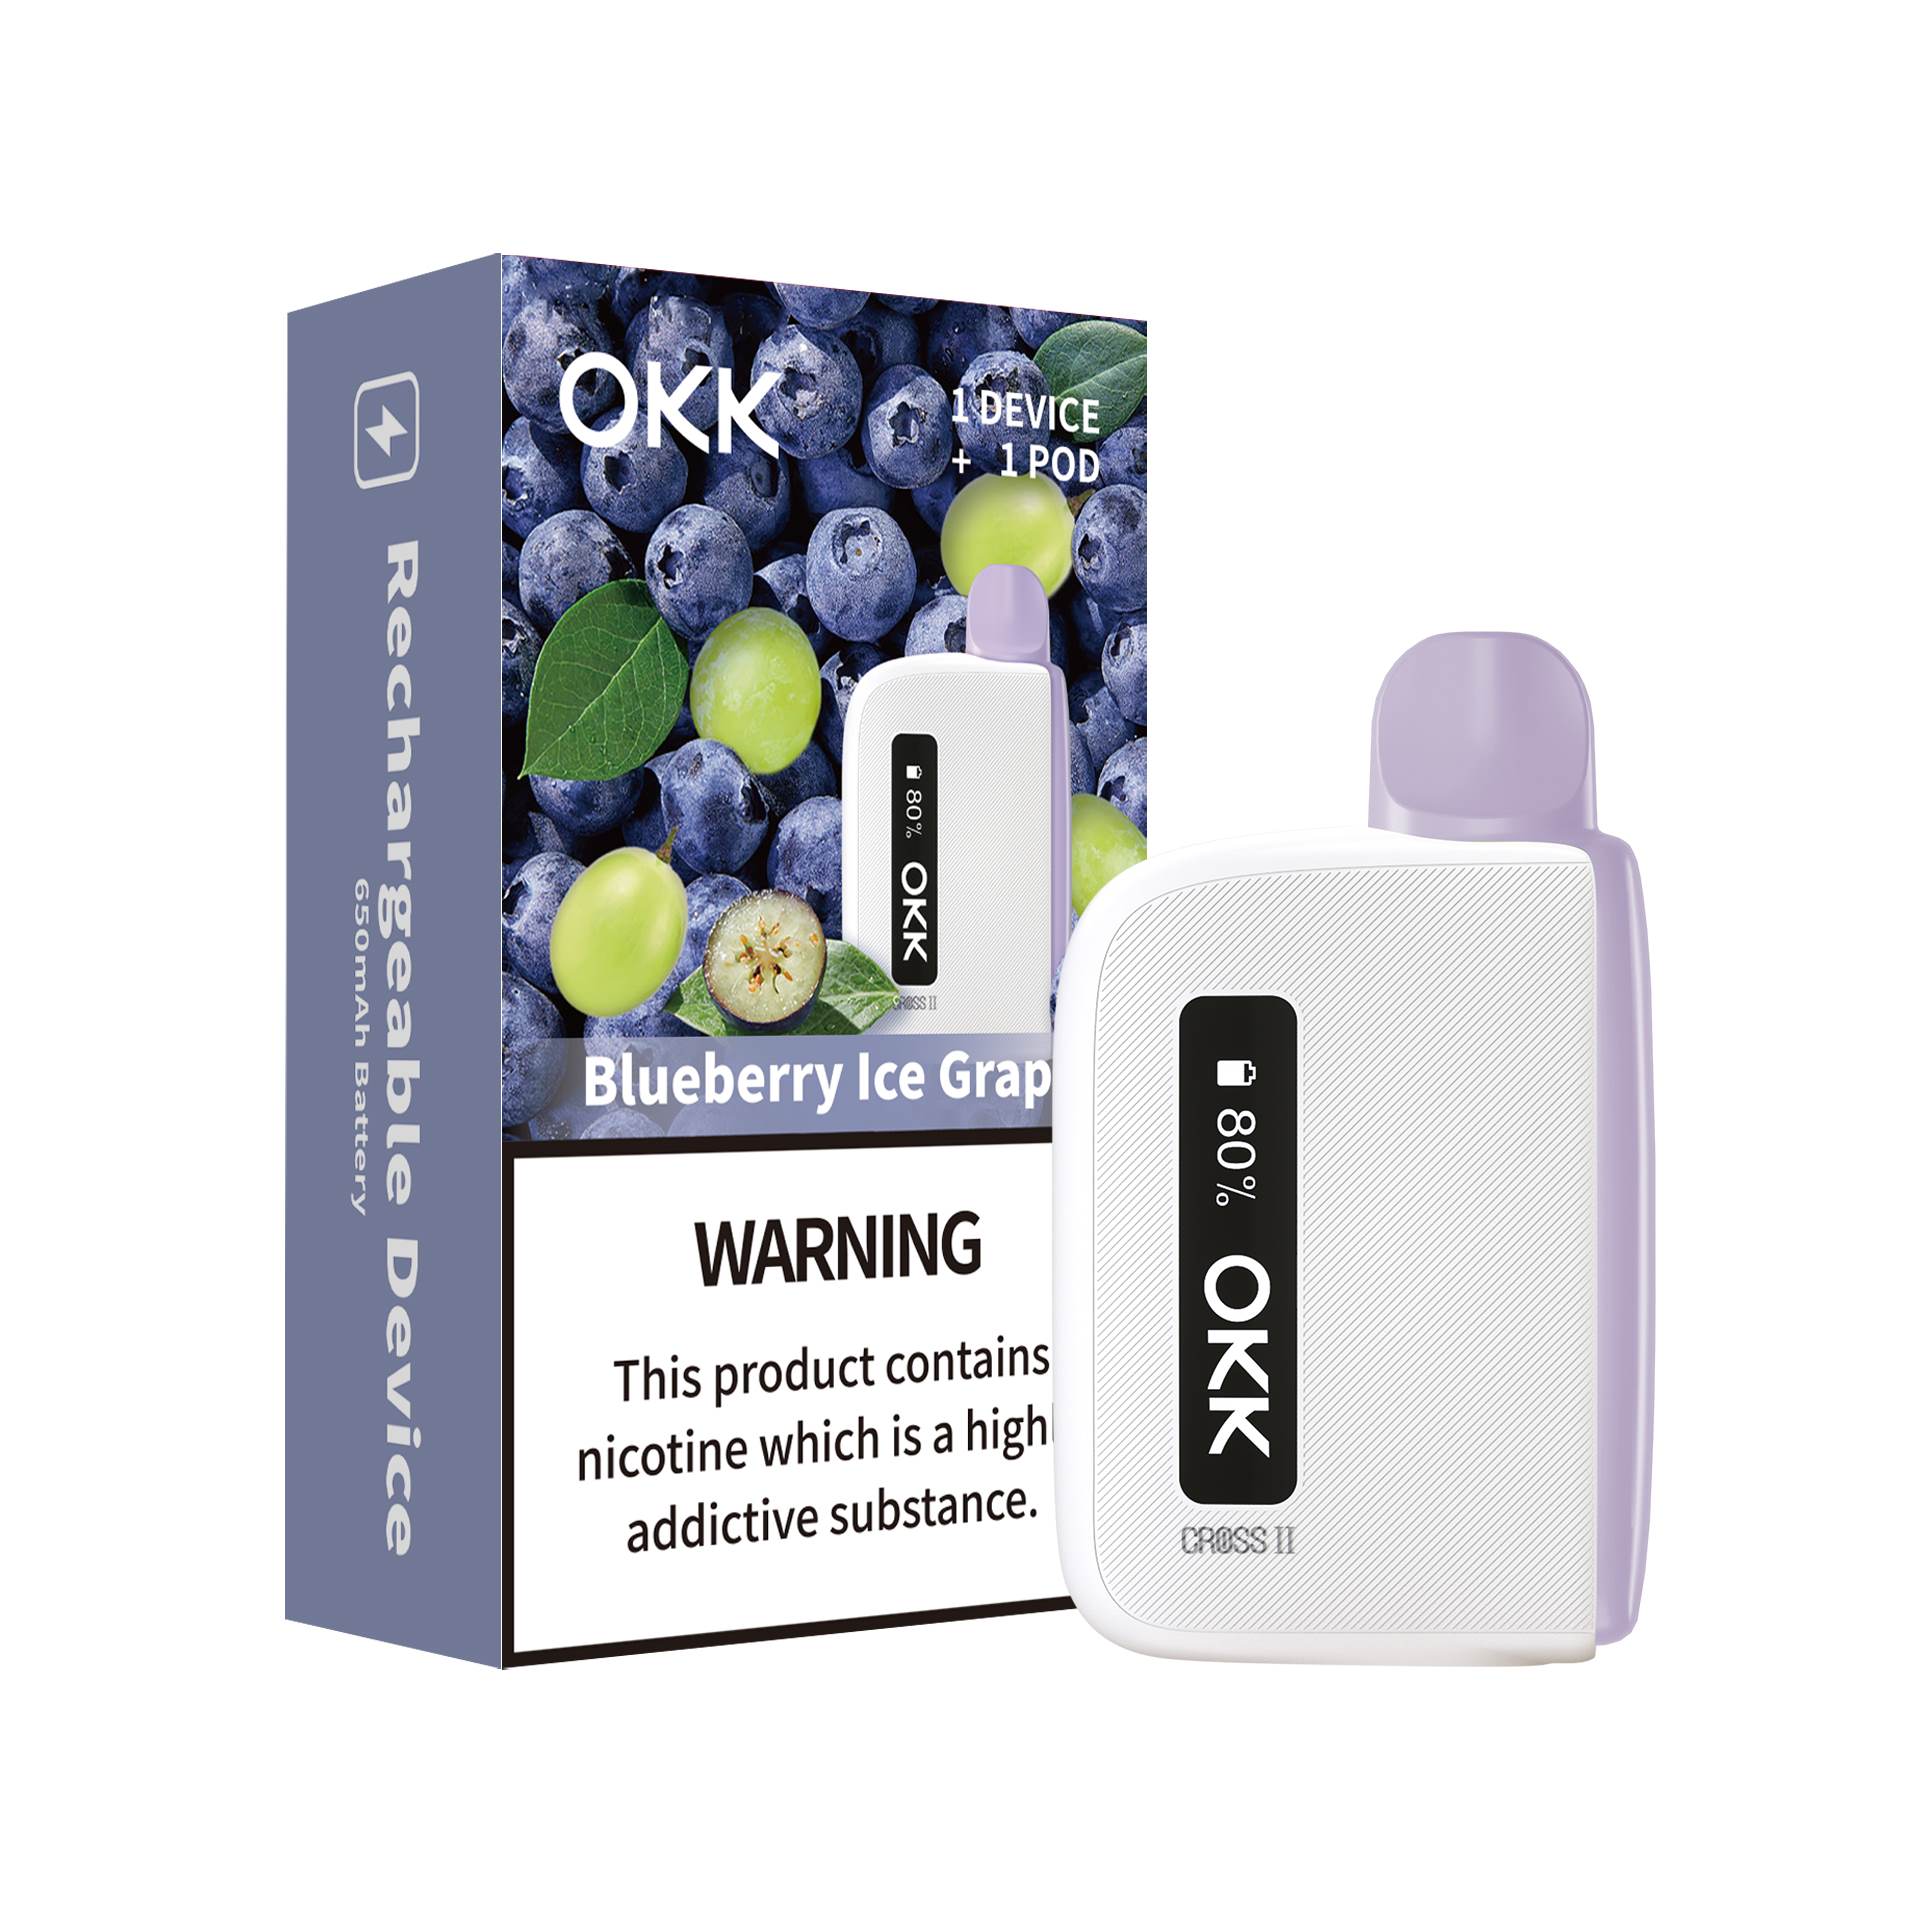 Okk  Cross 2 Kit